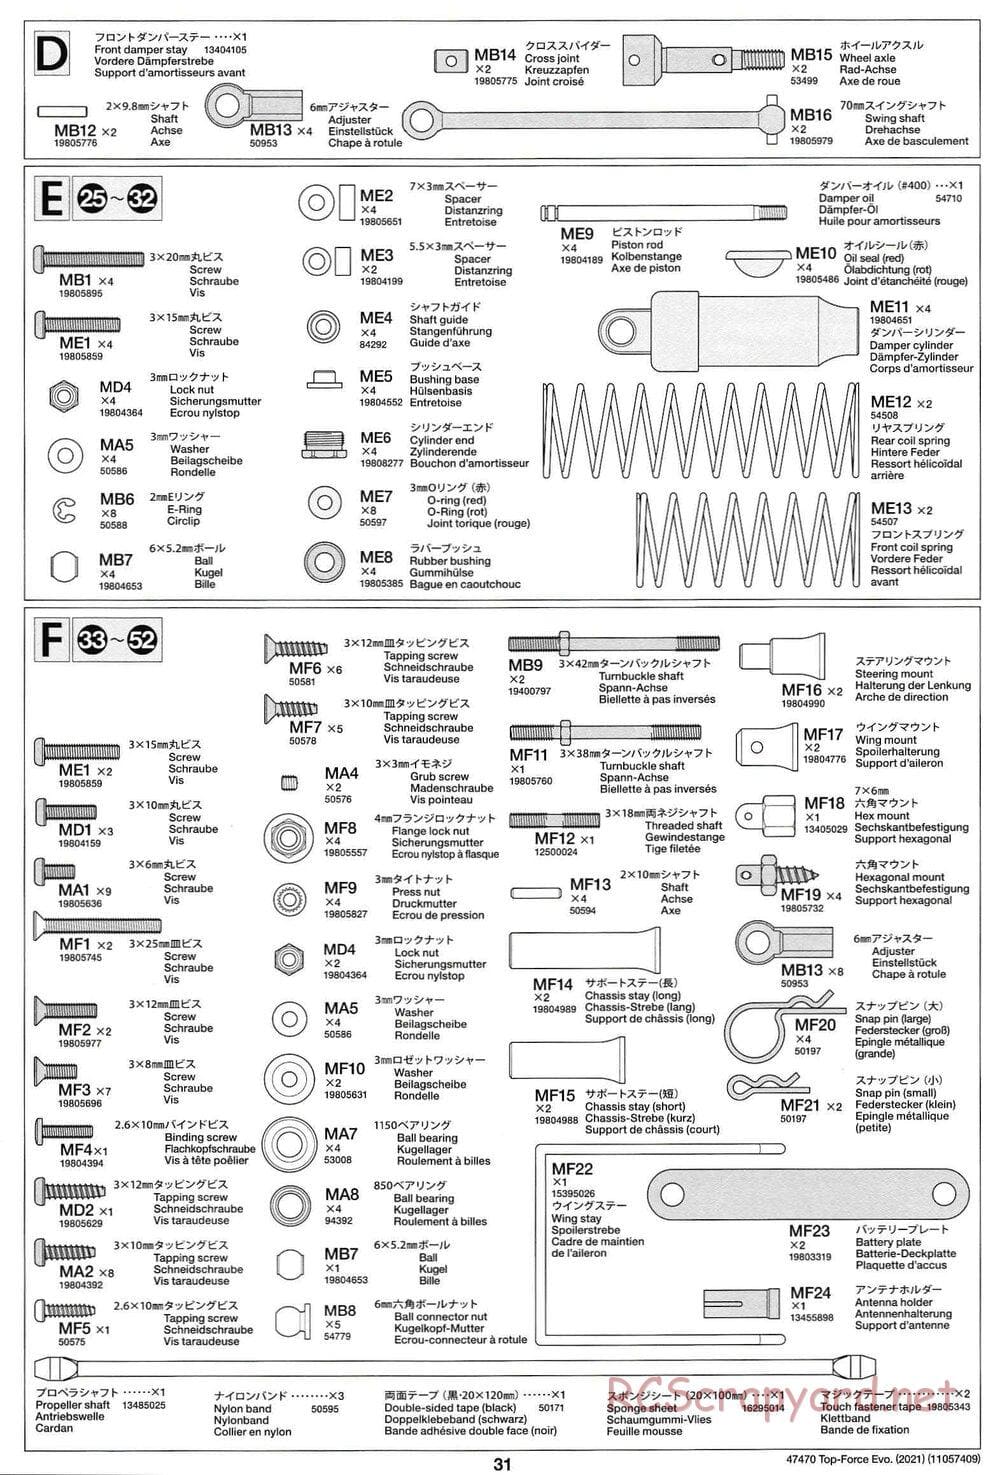 Tamiya - Top Force Evo 2021 - DF-01 Chassis - Manual - Page 31